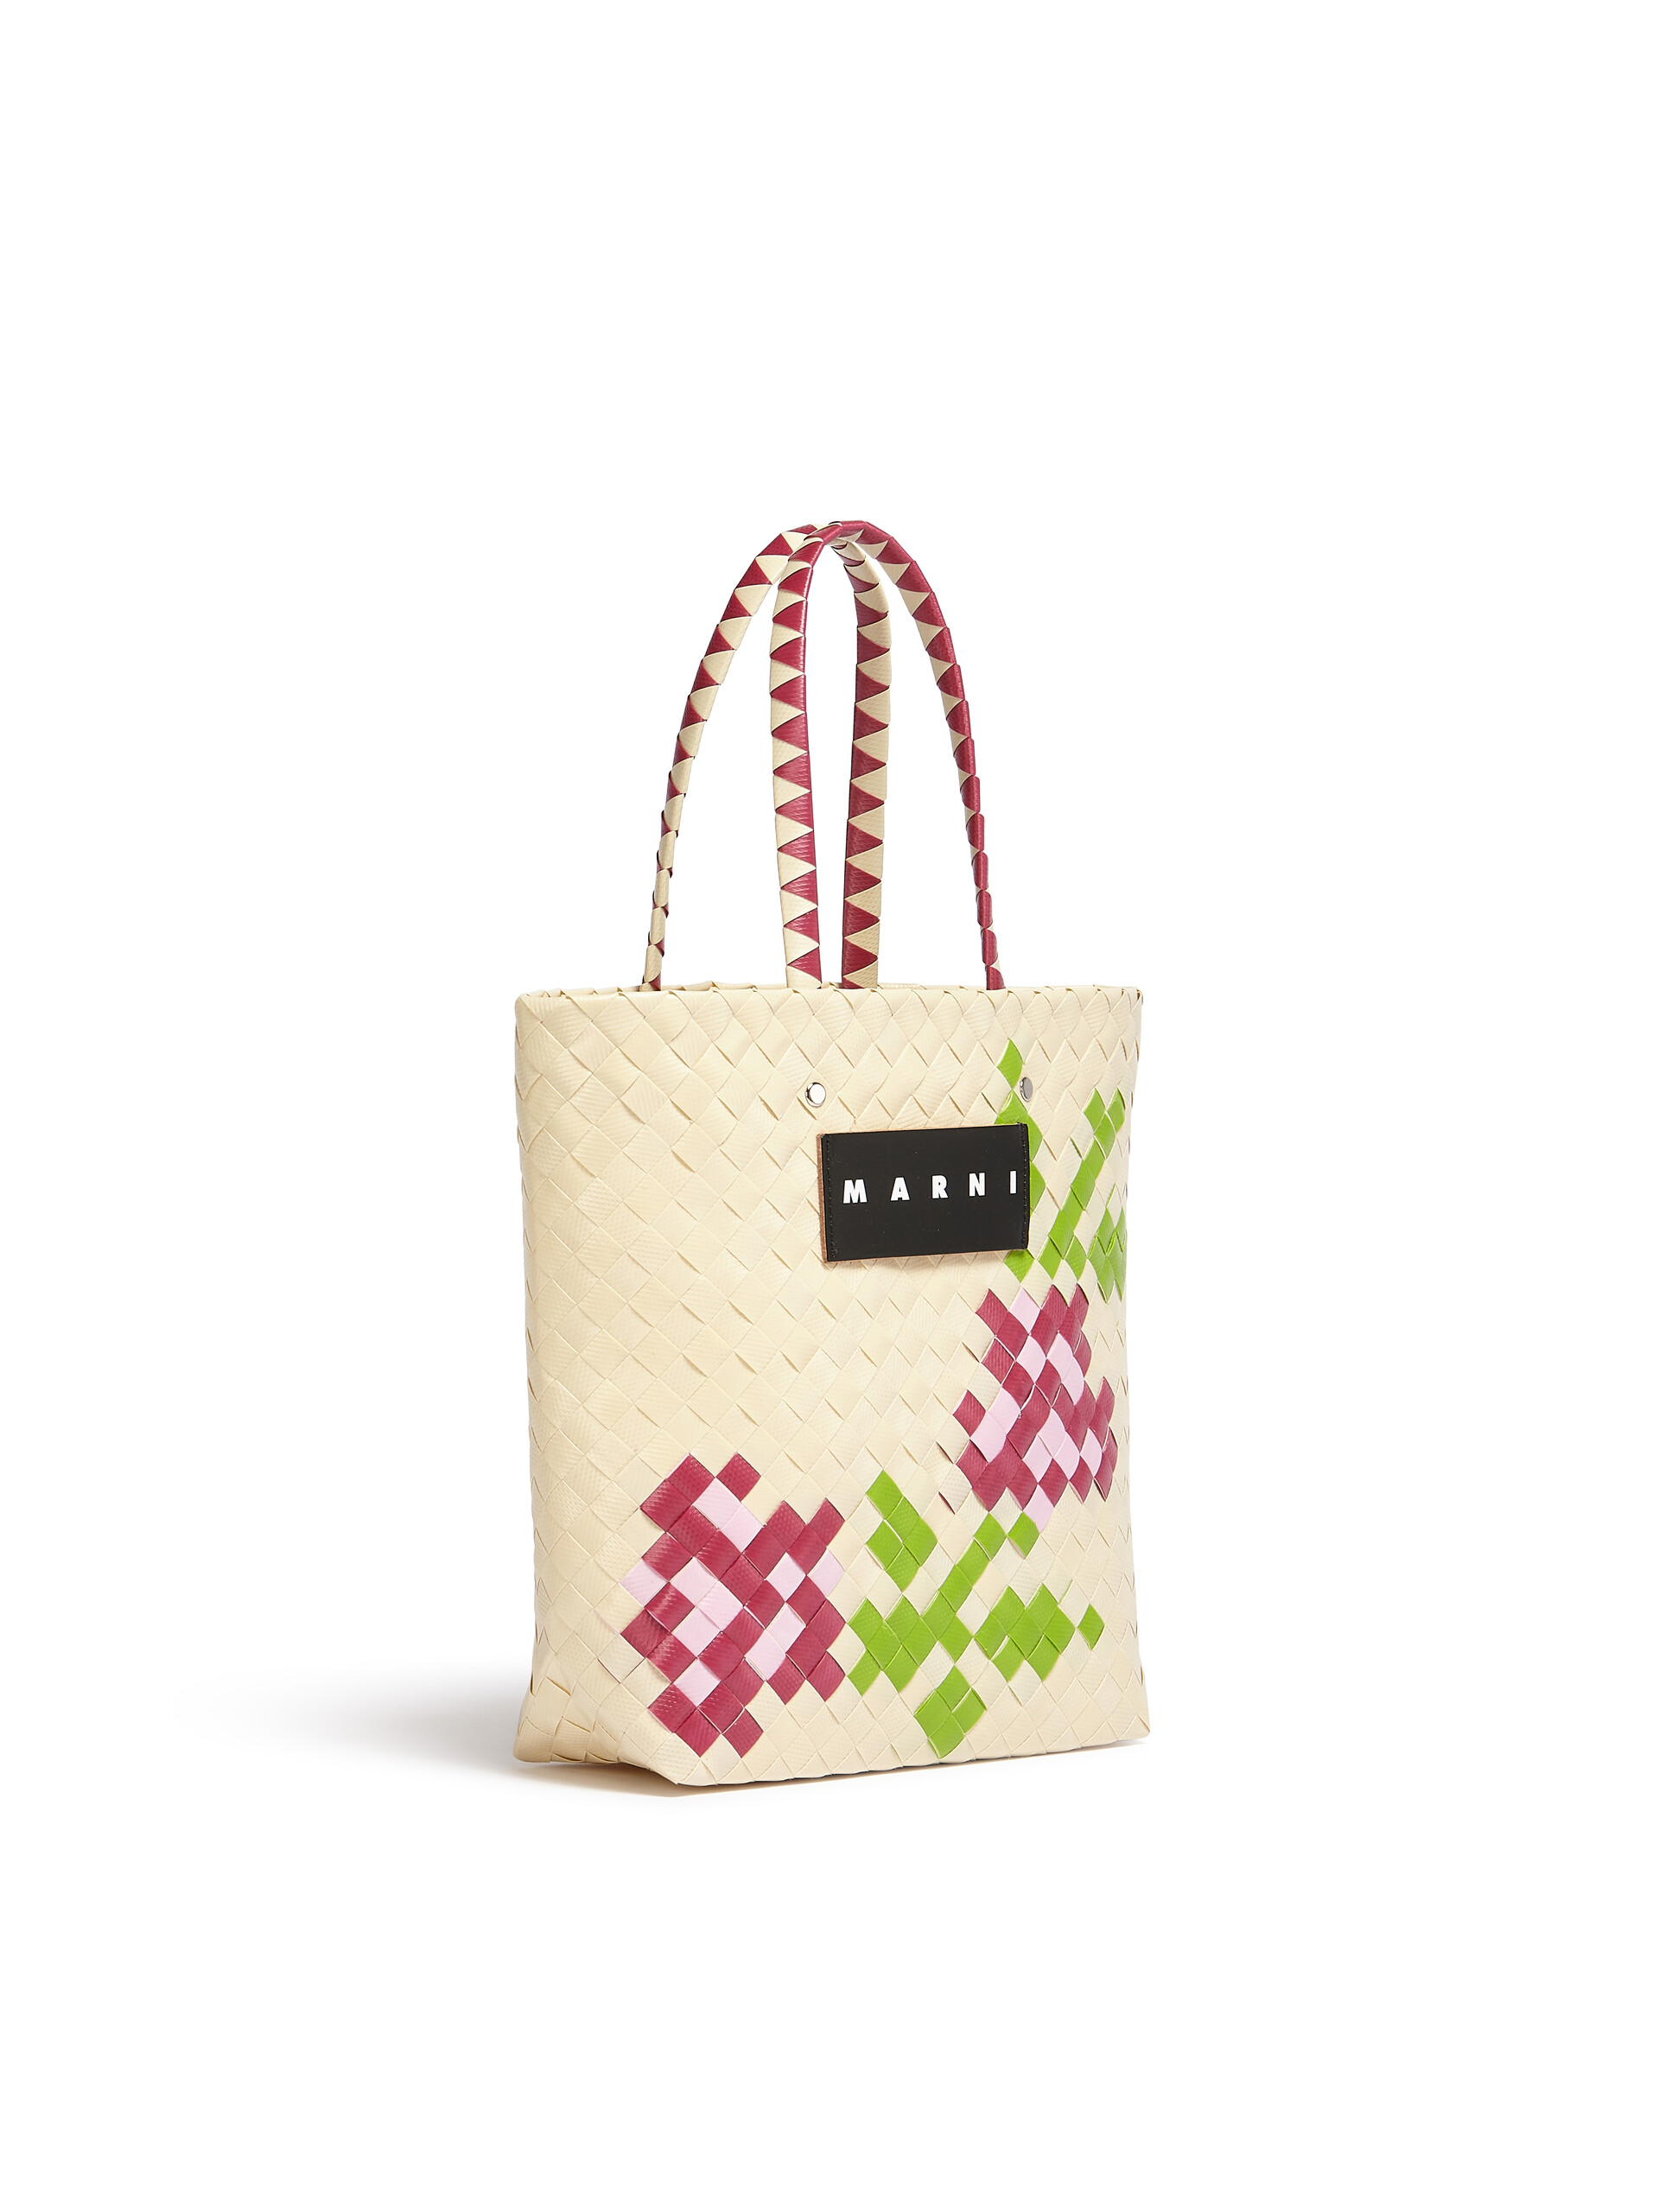 MARNI MARKET BORA small bag in white flower motif - Shopping Bags - Image 2